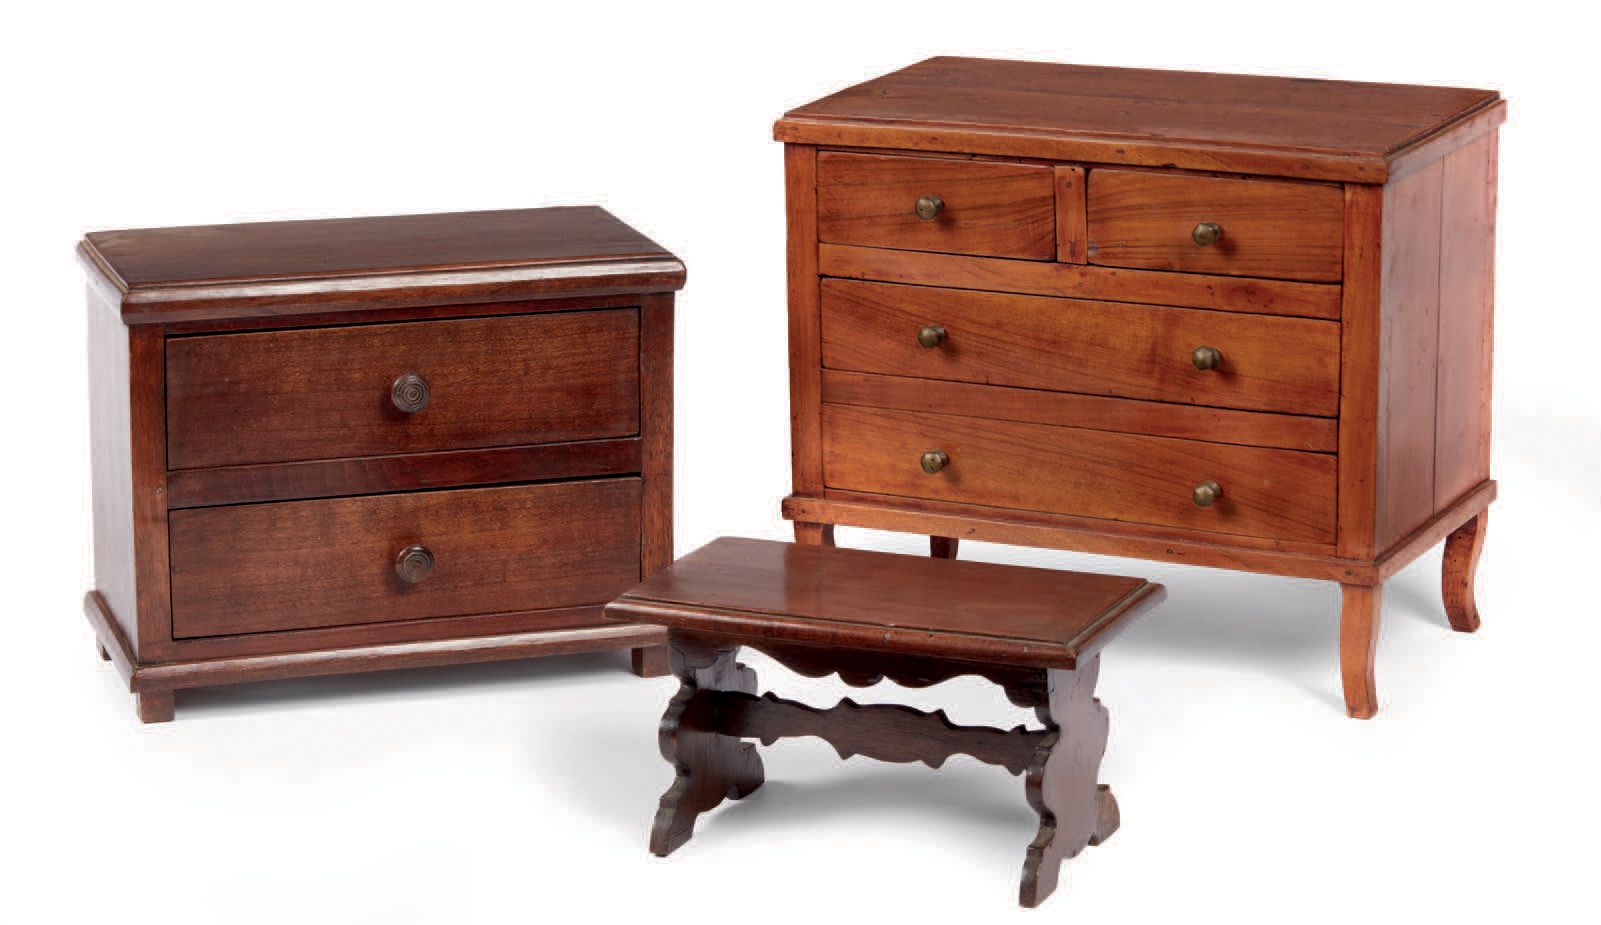 Null 四个微型家具的古董模型：两个抽屉柜，一个 "fratino "桌子和一个镜面衣柜，不同的木材和尺寸
Quatre modèles anciens de&hellip;